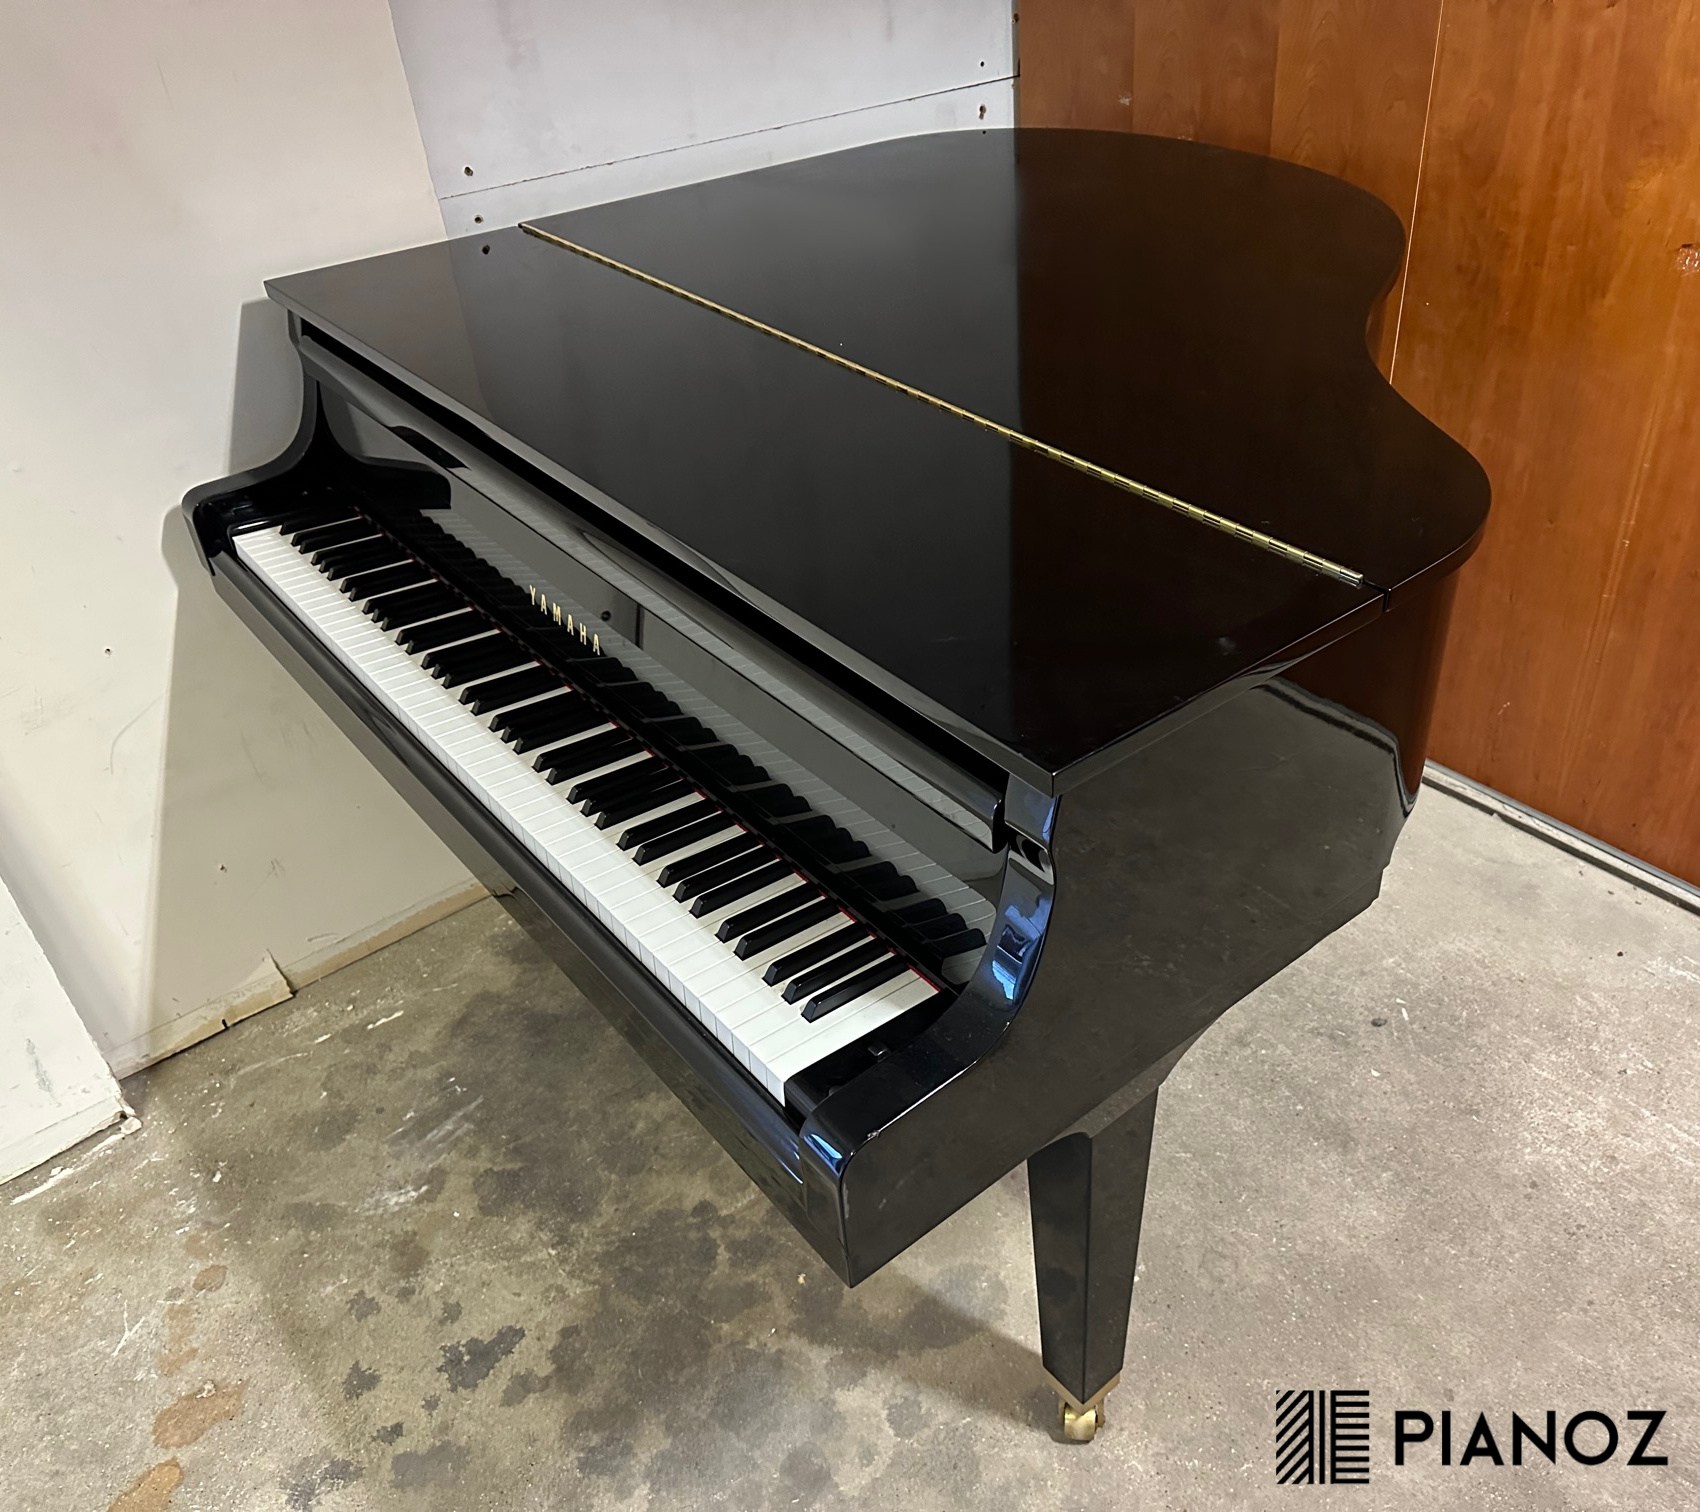  Yamaha GB1 CGP1000 Digital Baby Grand Piano piano for sale in UK